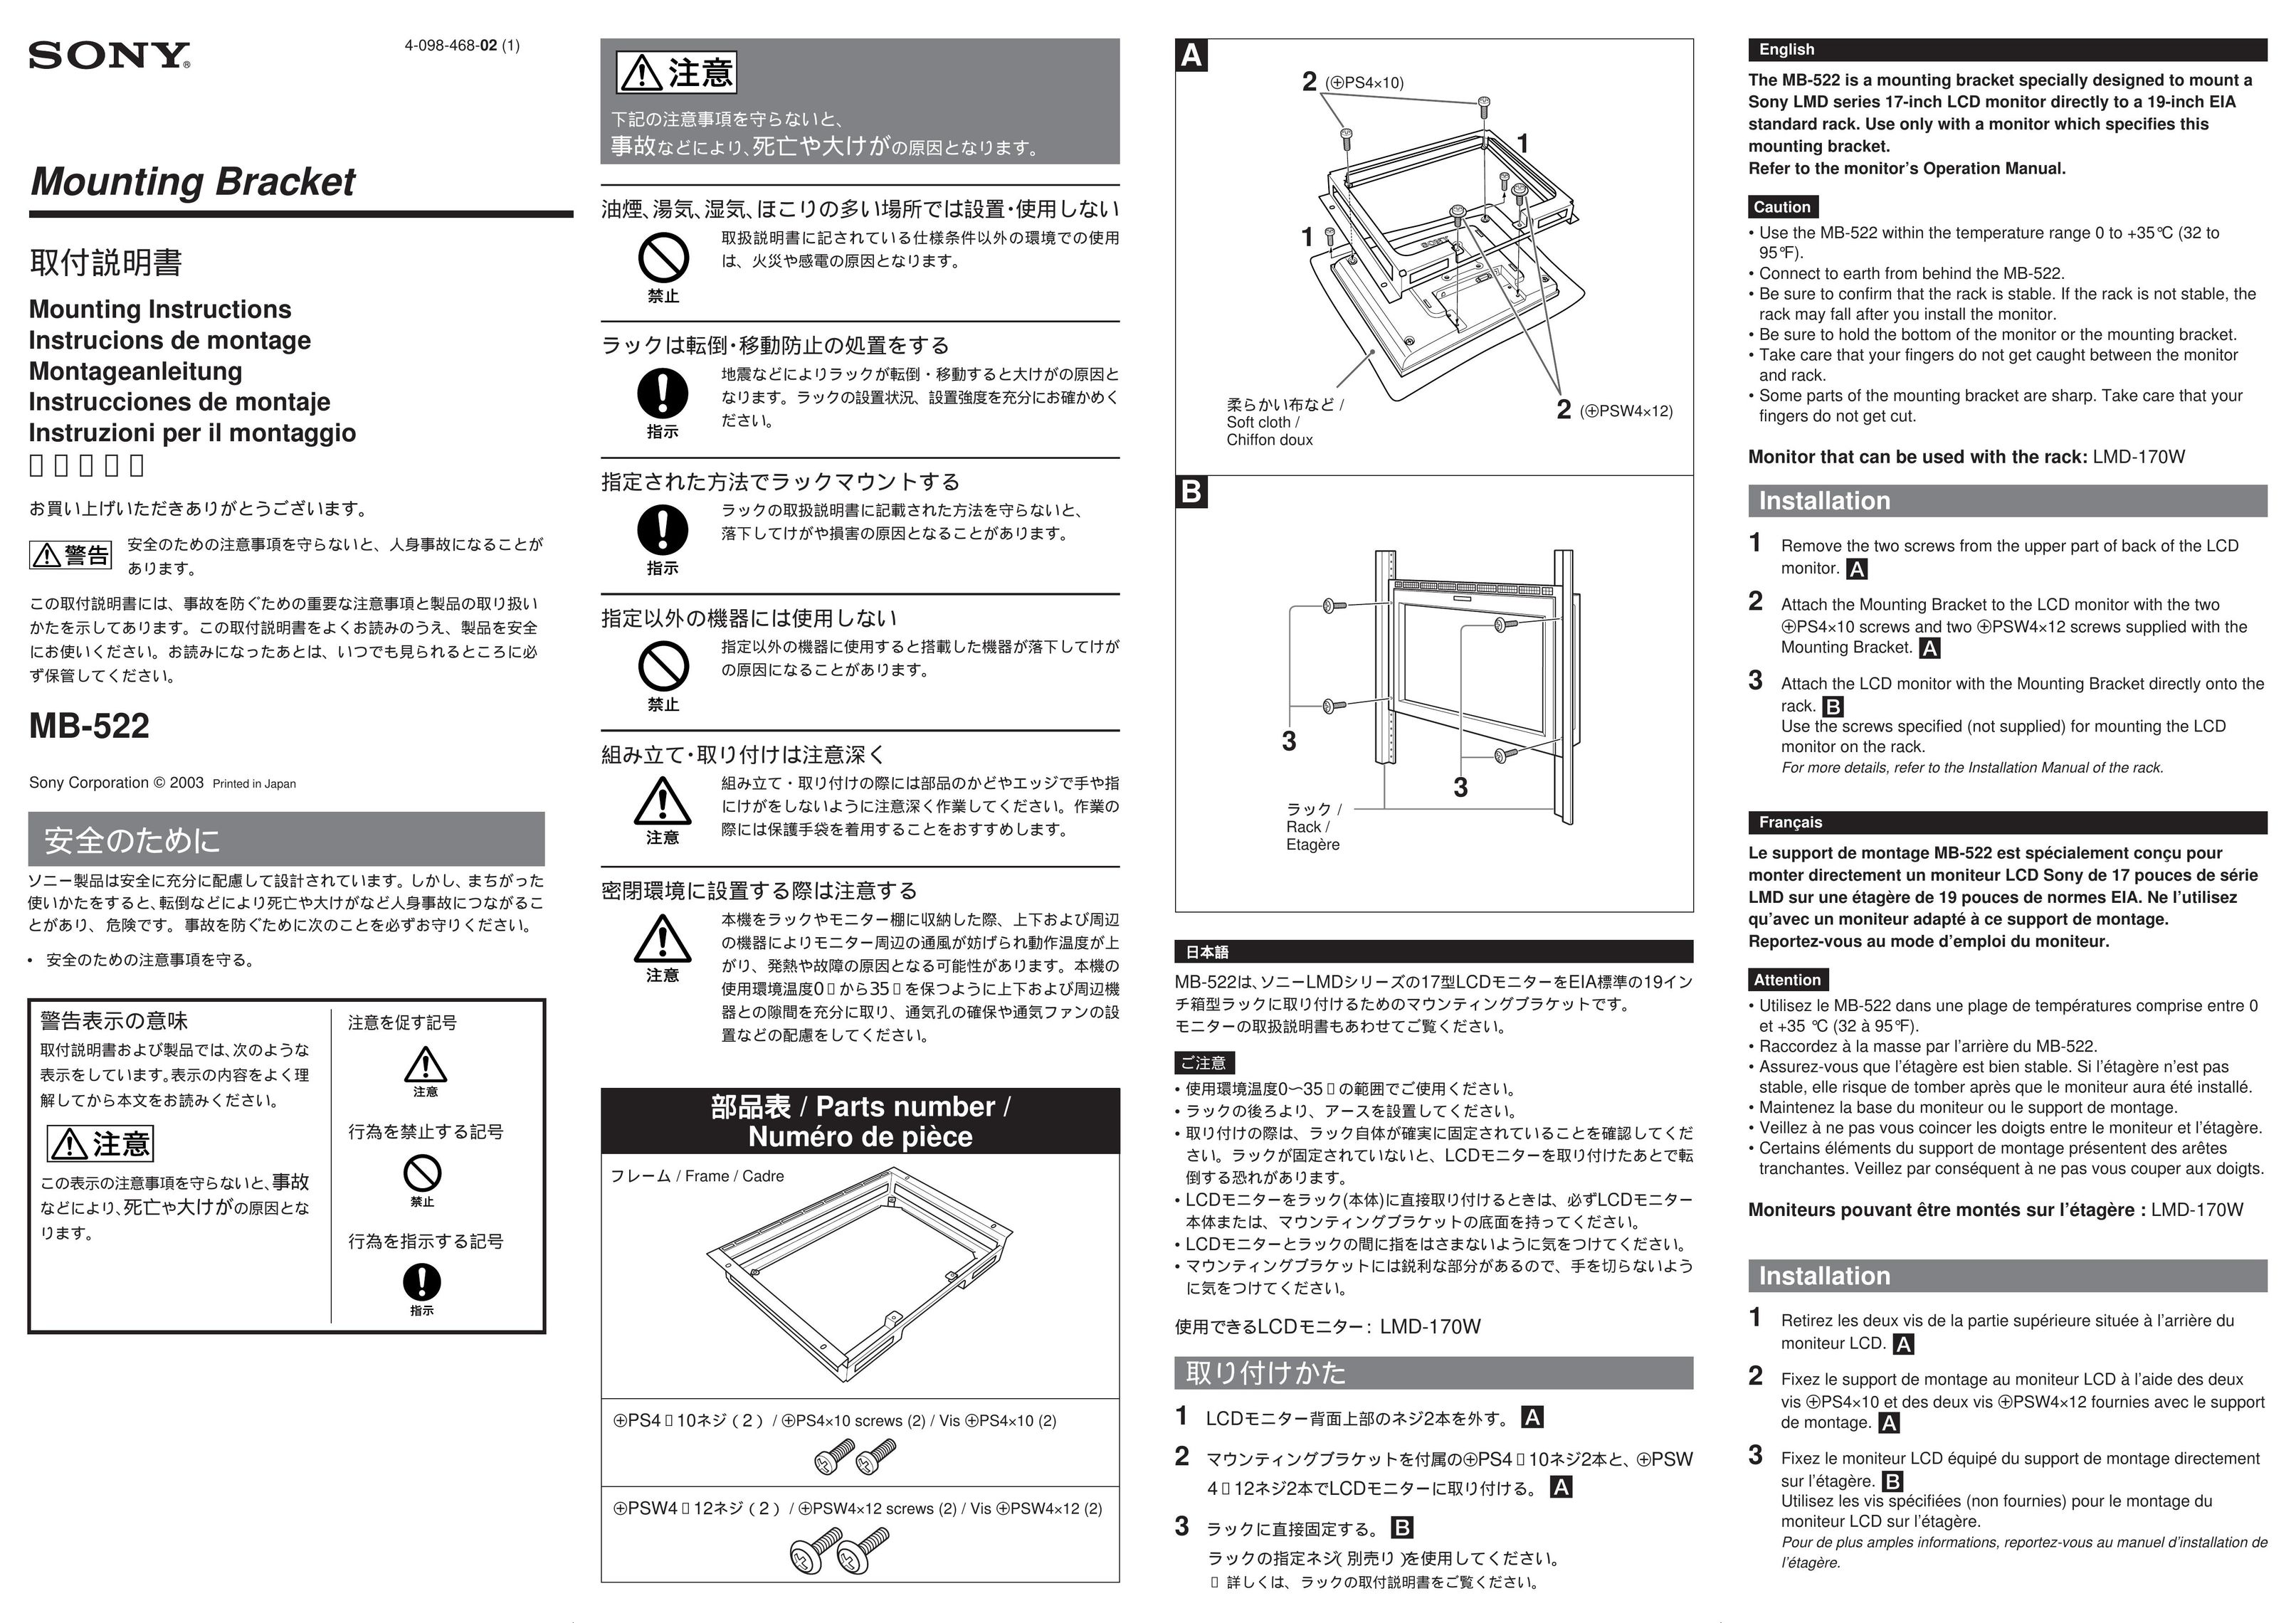 Sony MB-522 TV Mount User Manual